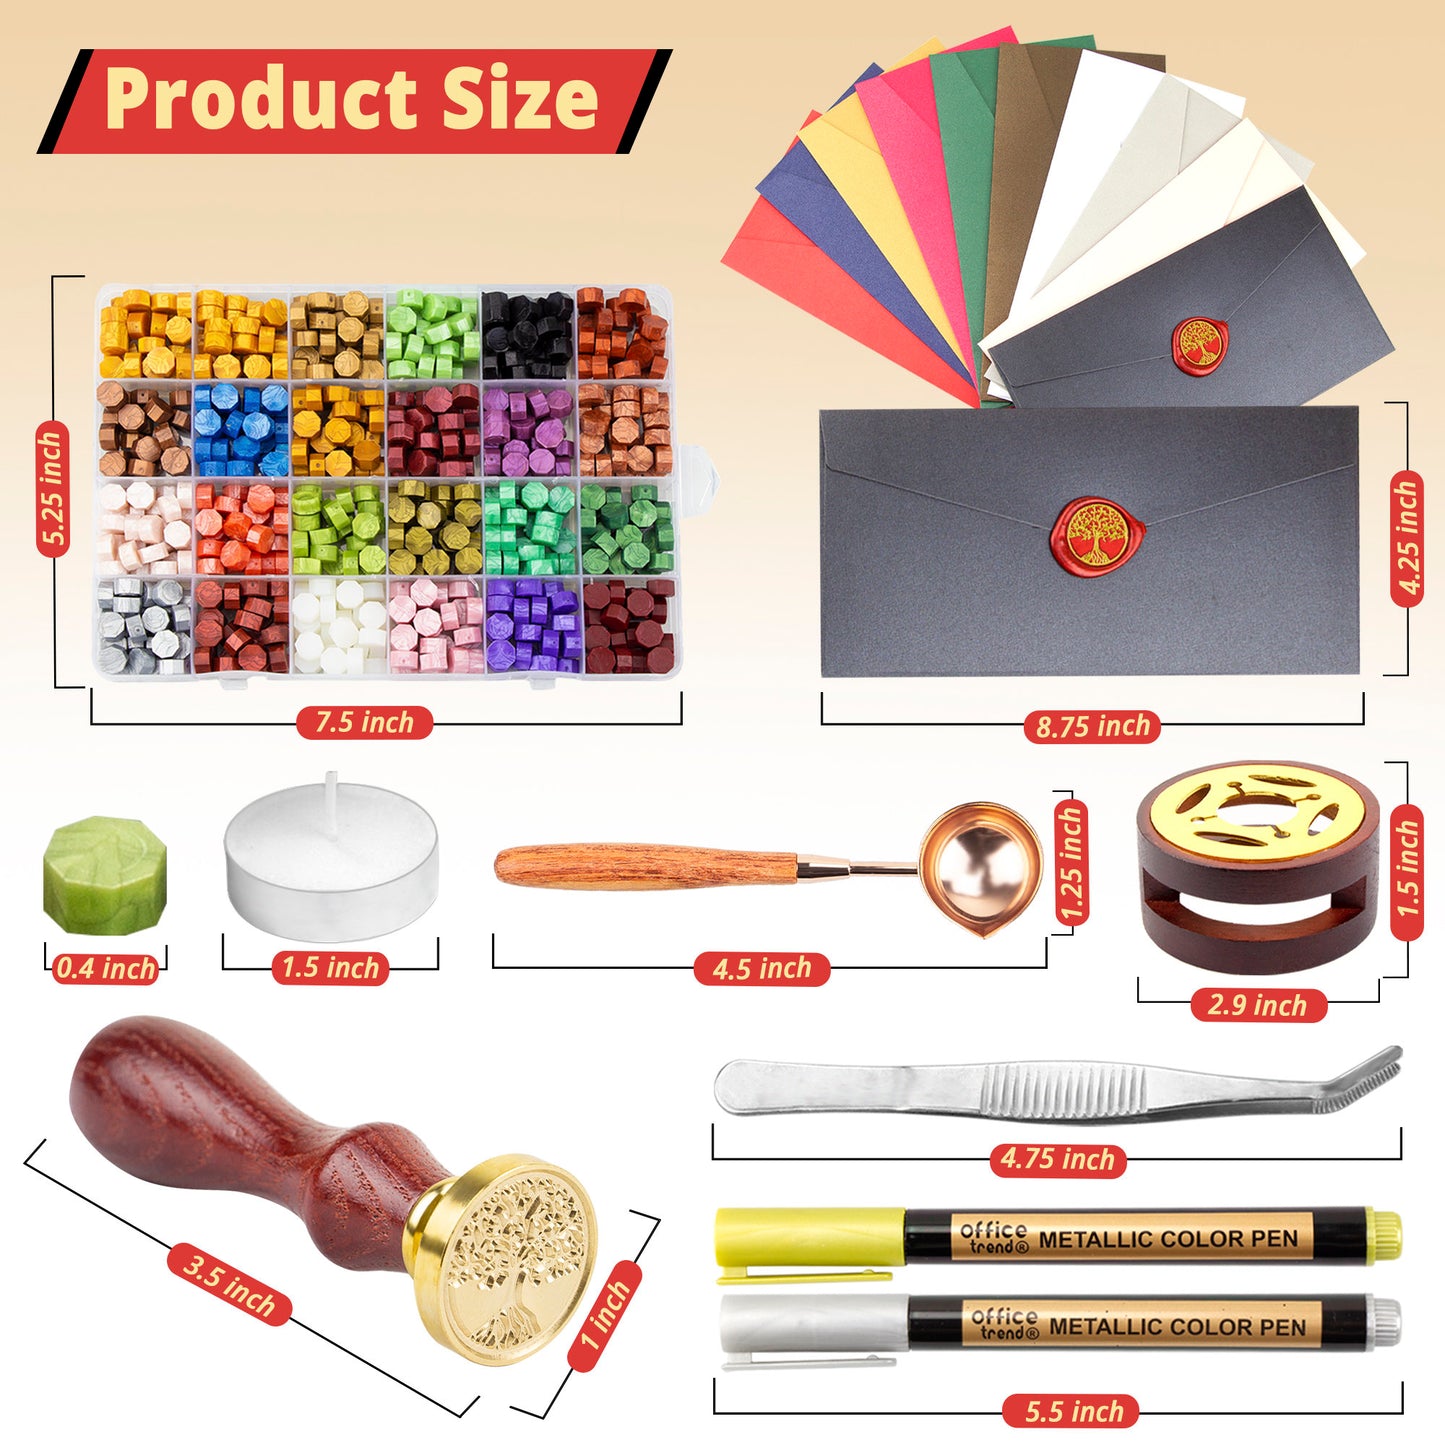 Wax Seal Stamp Kit - Wax Seal Kit 650pcs Wax Seal Beads, Sealing Wax Warmer, Envelopes, Wax Stamp, Wax Seal Spoon, Candles, Tweezers and Pen